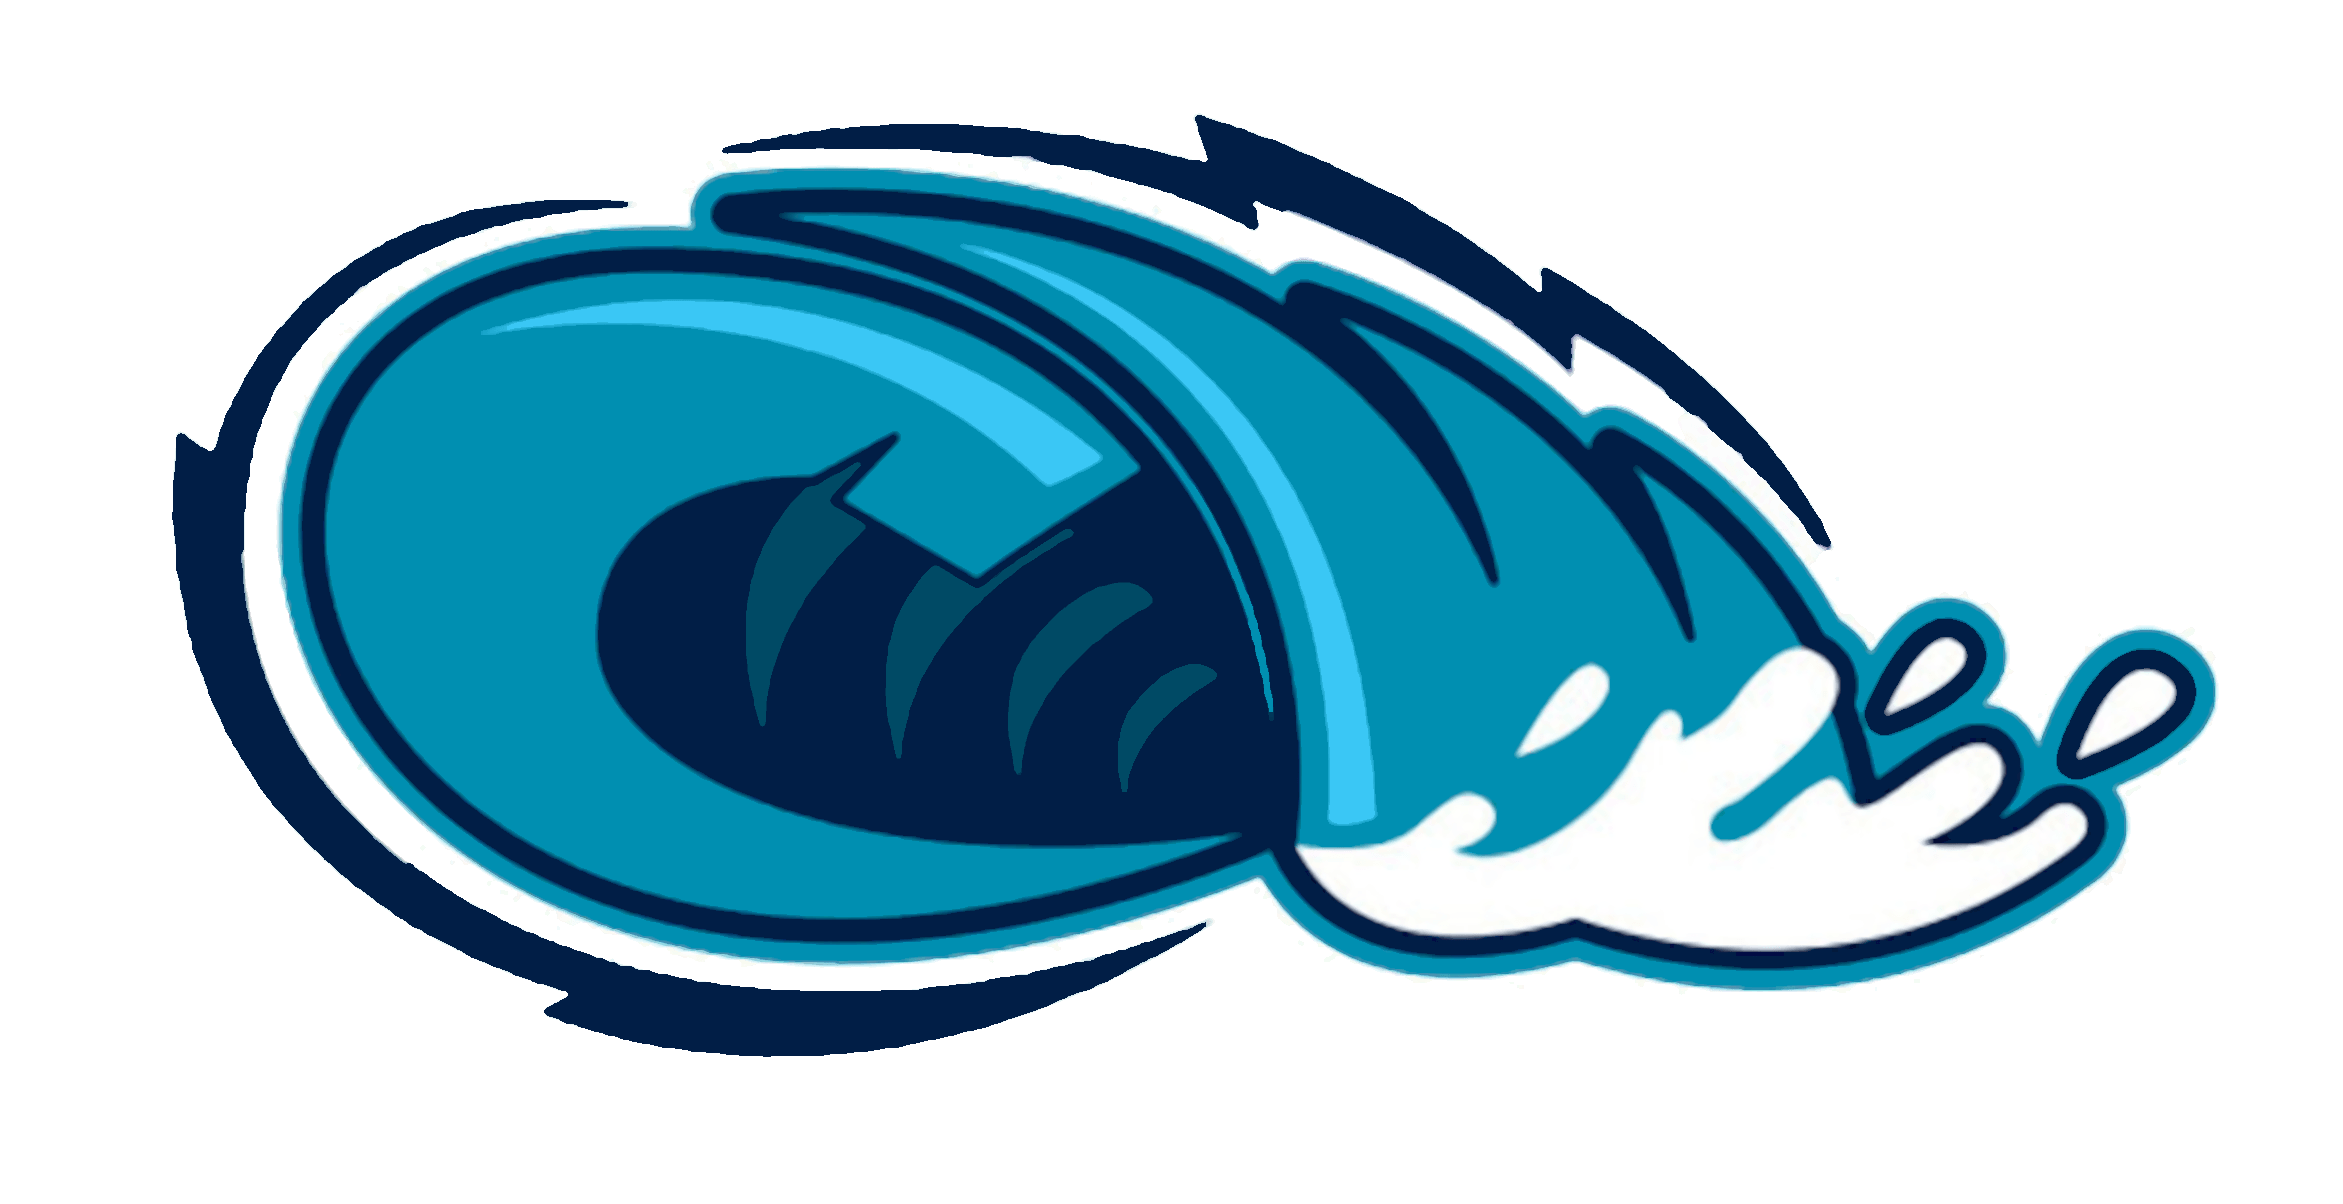 Tsunami Wave Logo - Tsunami Wave PNG Transparent Tsunami Wave.PNG Images. | PlusPNG